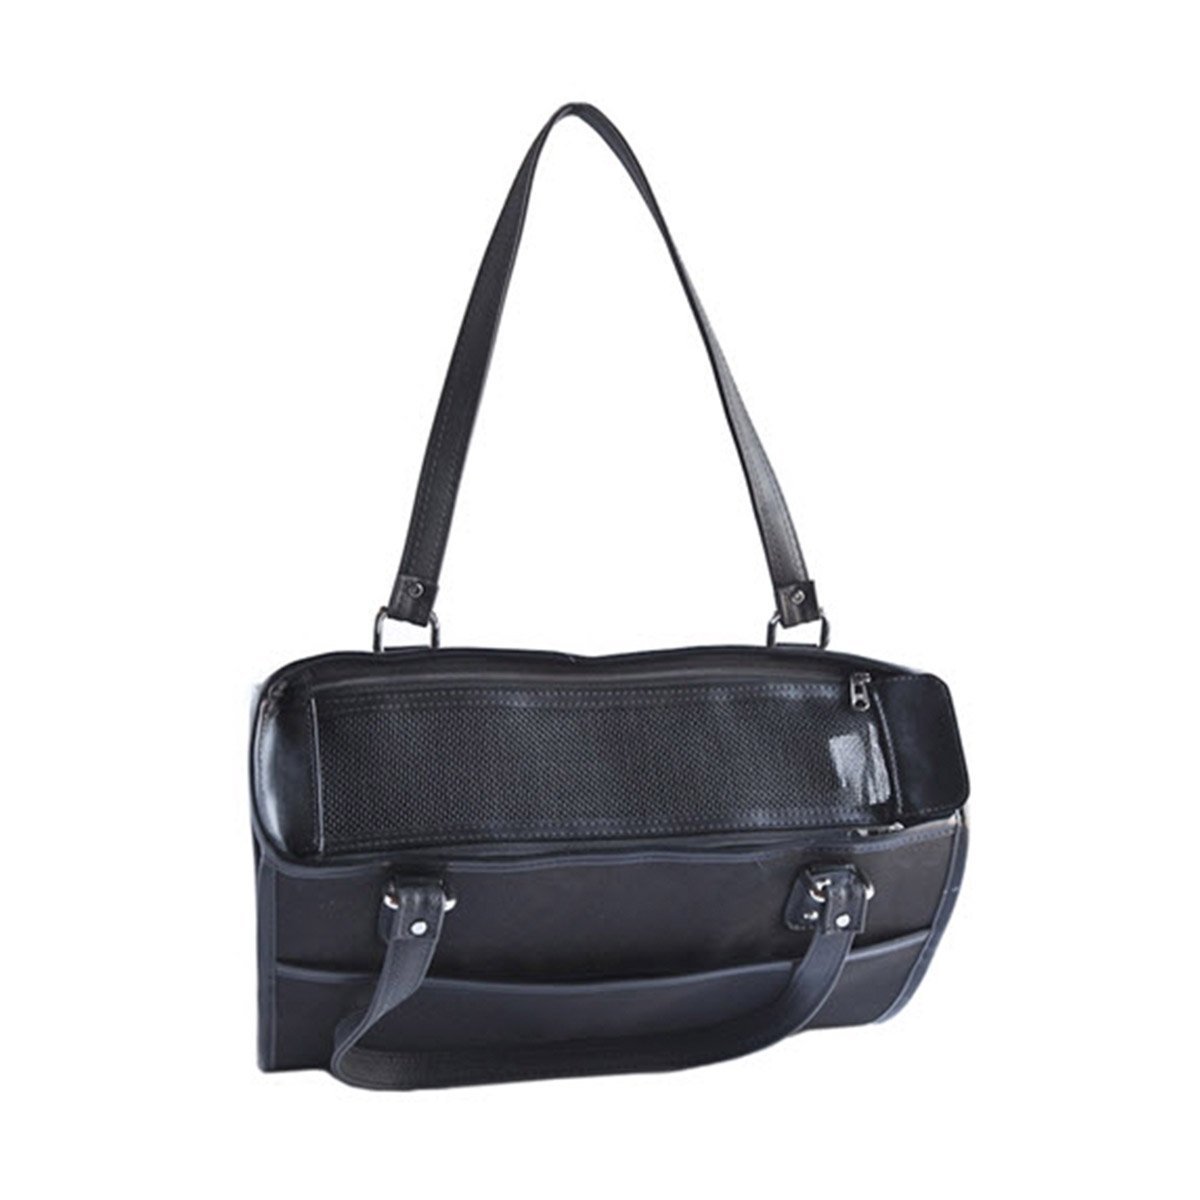 Payton Dog Carrier Handbag - Black | Pawlicious & Company